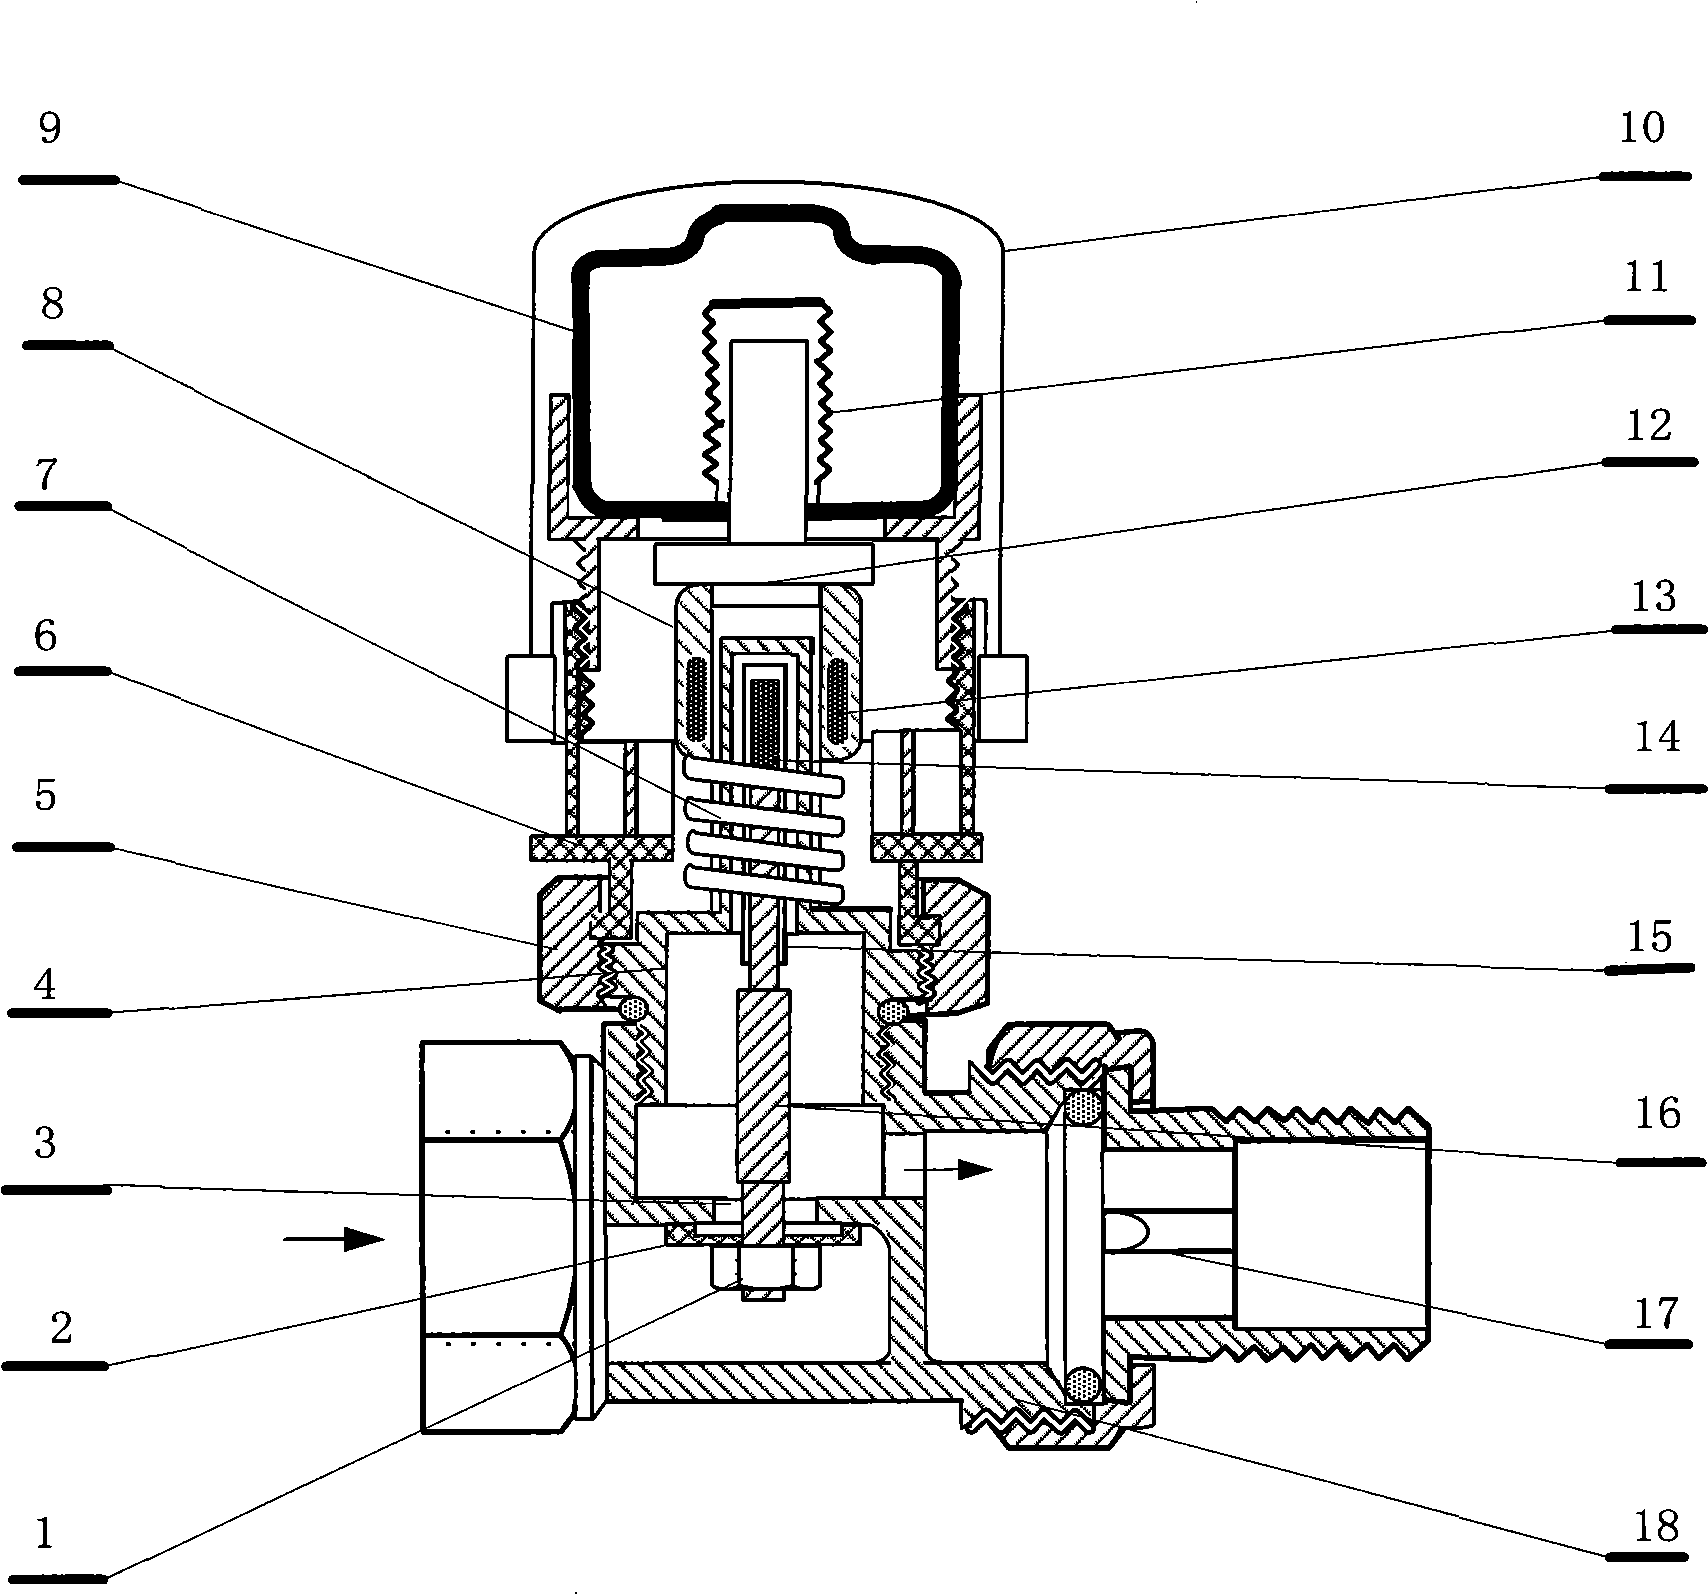 Self-powered type fire valve